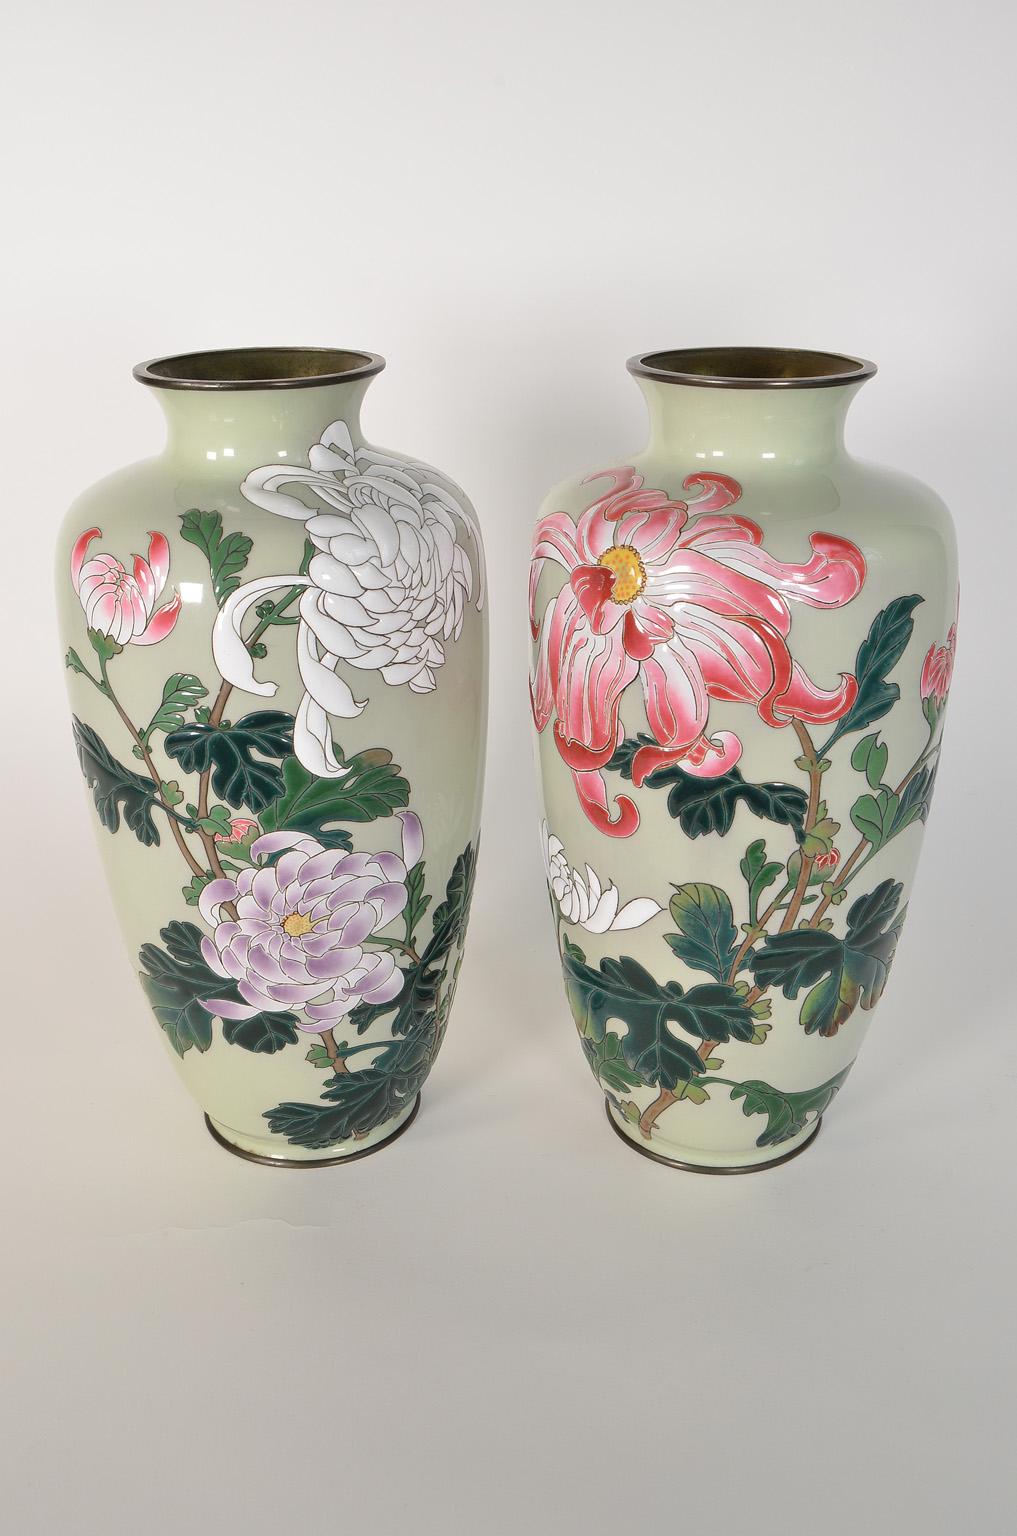 Cloissoné Pair of Japanese Vases 19th Century Bronze Enamel Cloisonne Meiji Period